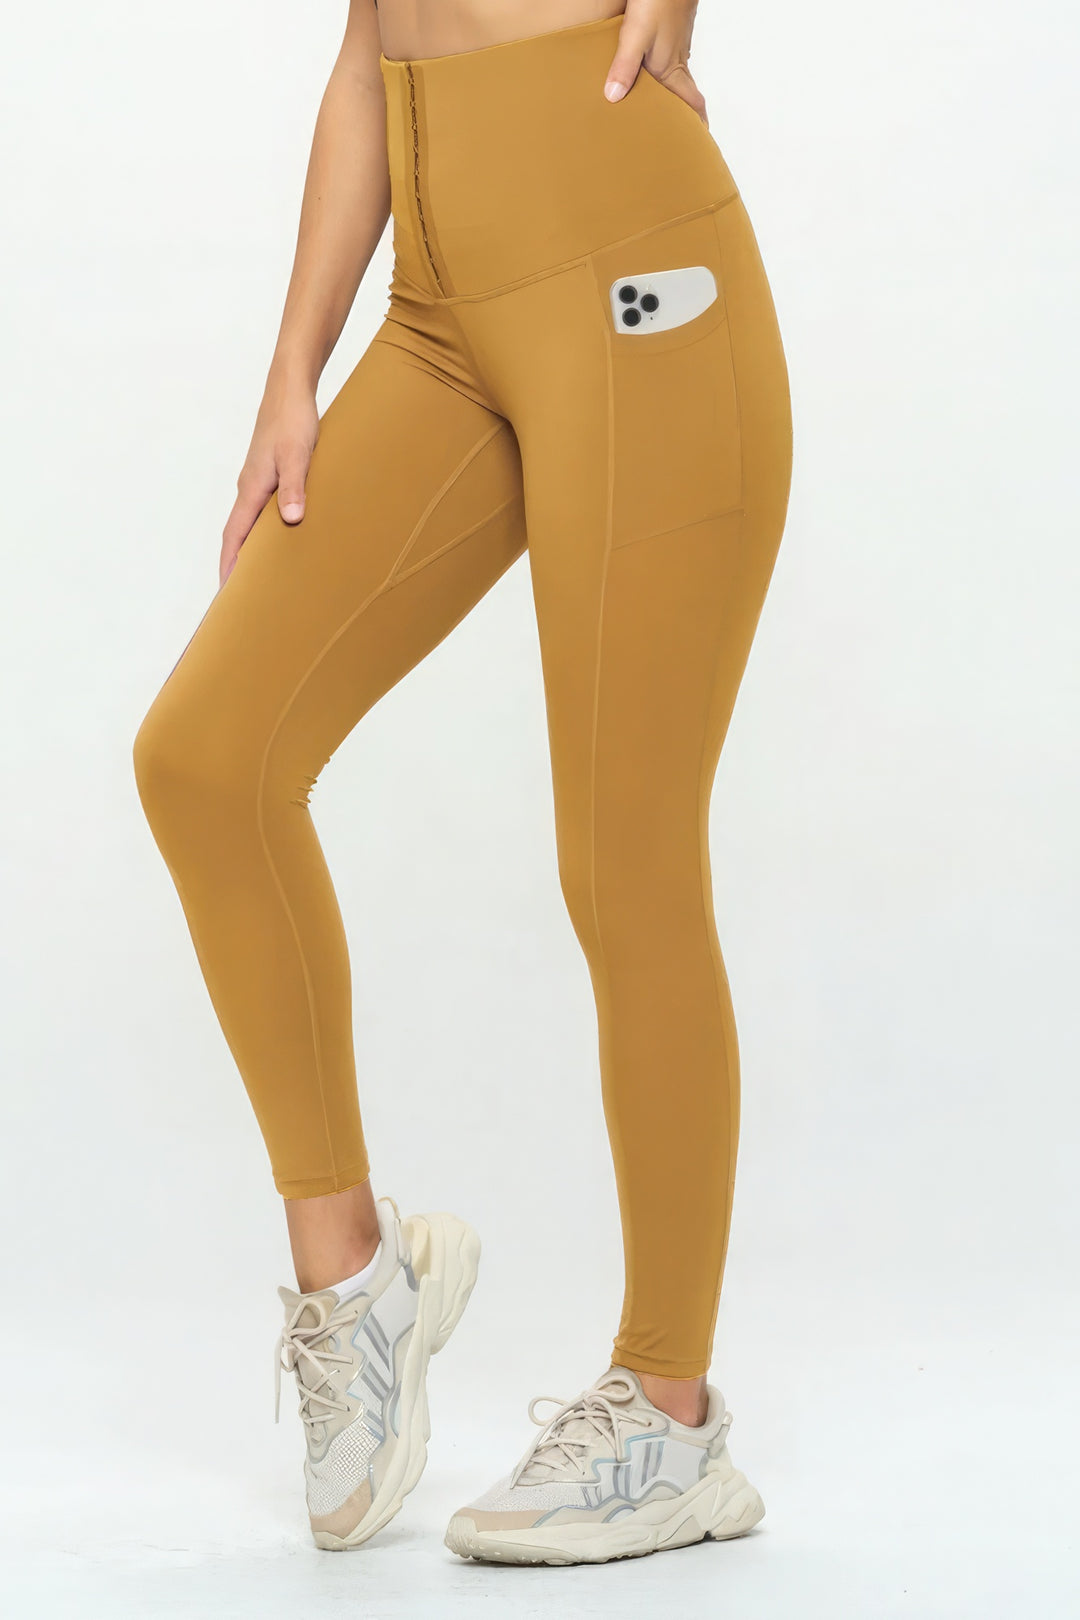 Mustard Fashion Yoga Body Shaper Legging with Cellphone Pockets & Hooks Closure